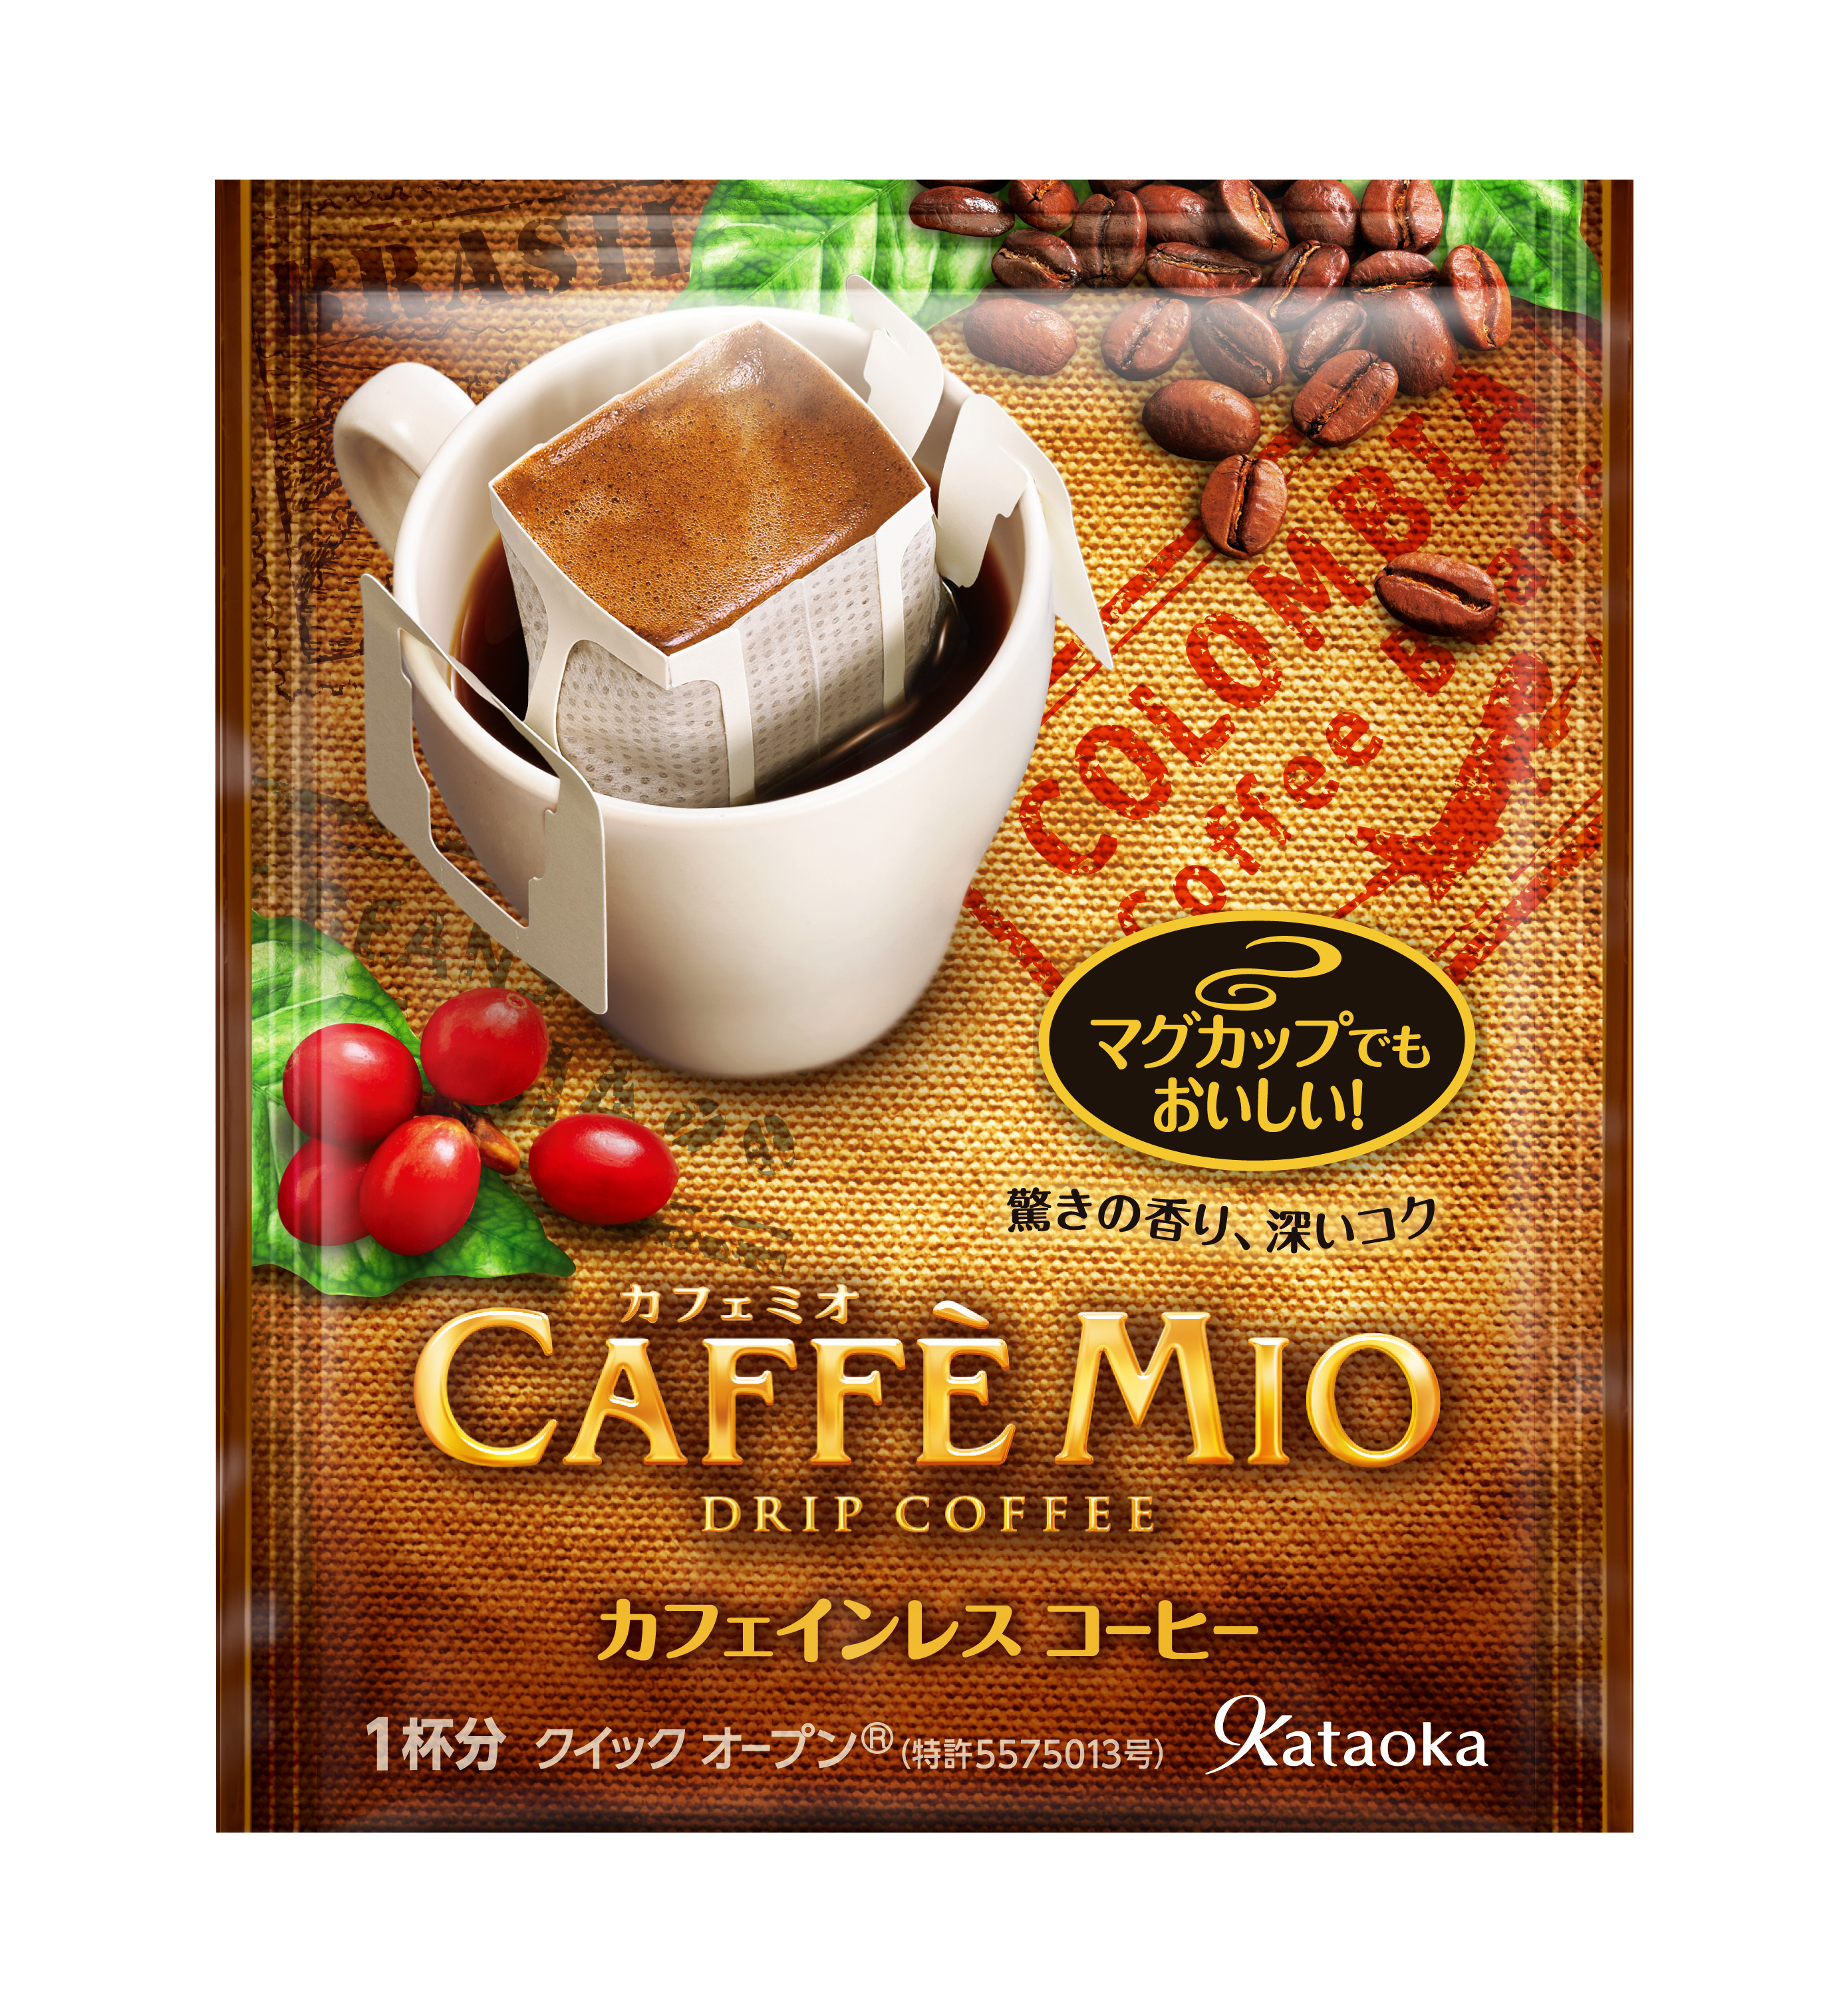  Caffe Mio